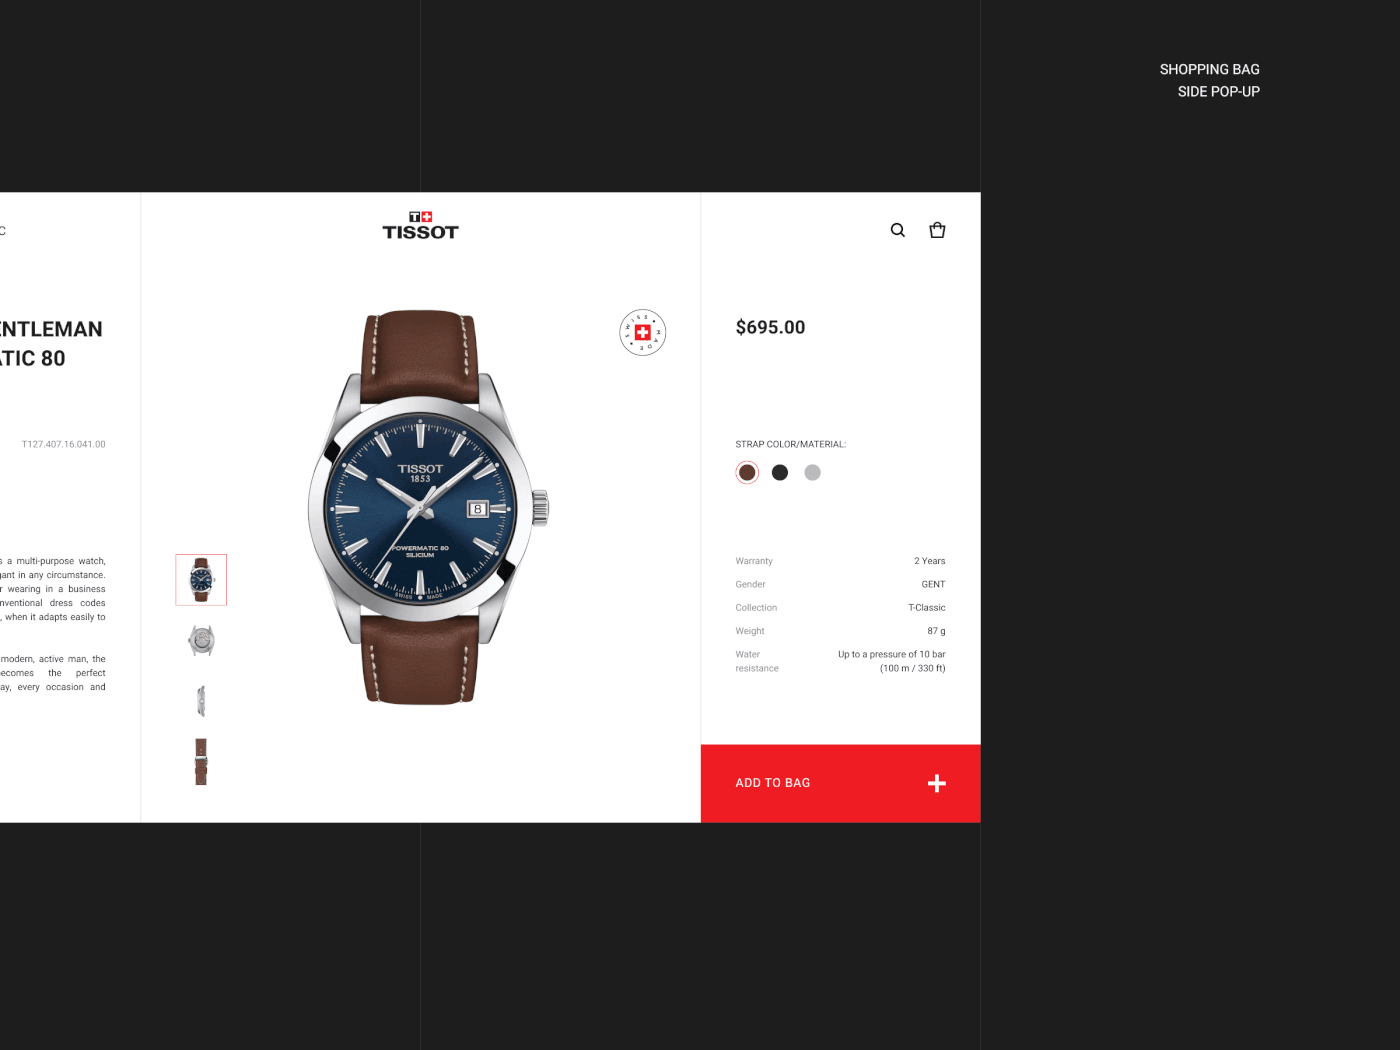 clock concept redesign TISSOT watch Web Design  UI/UX ui design shop E COMMERCE